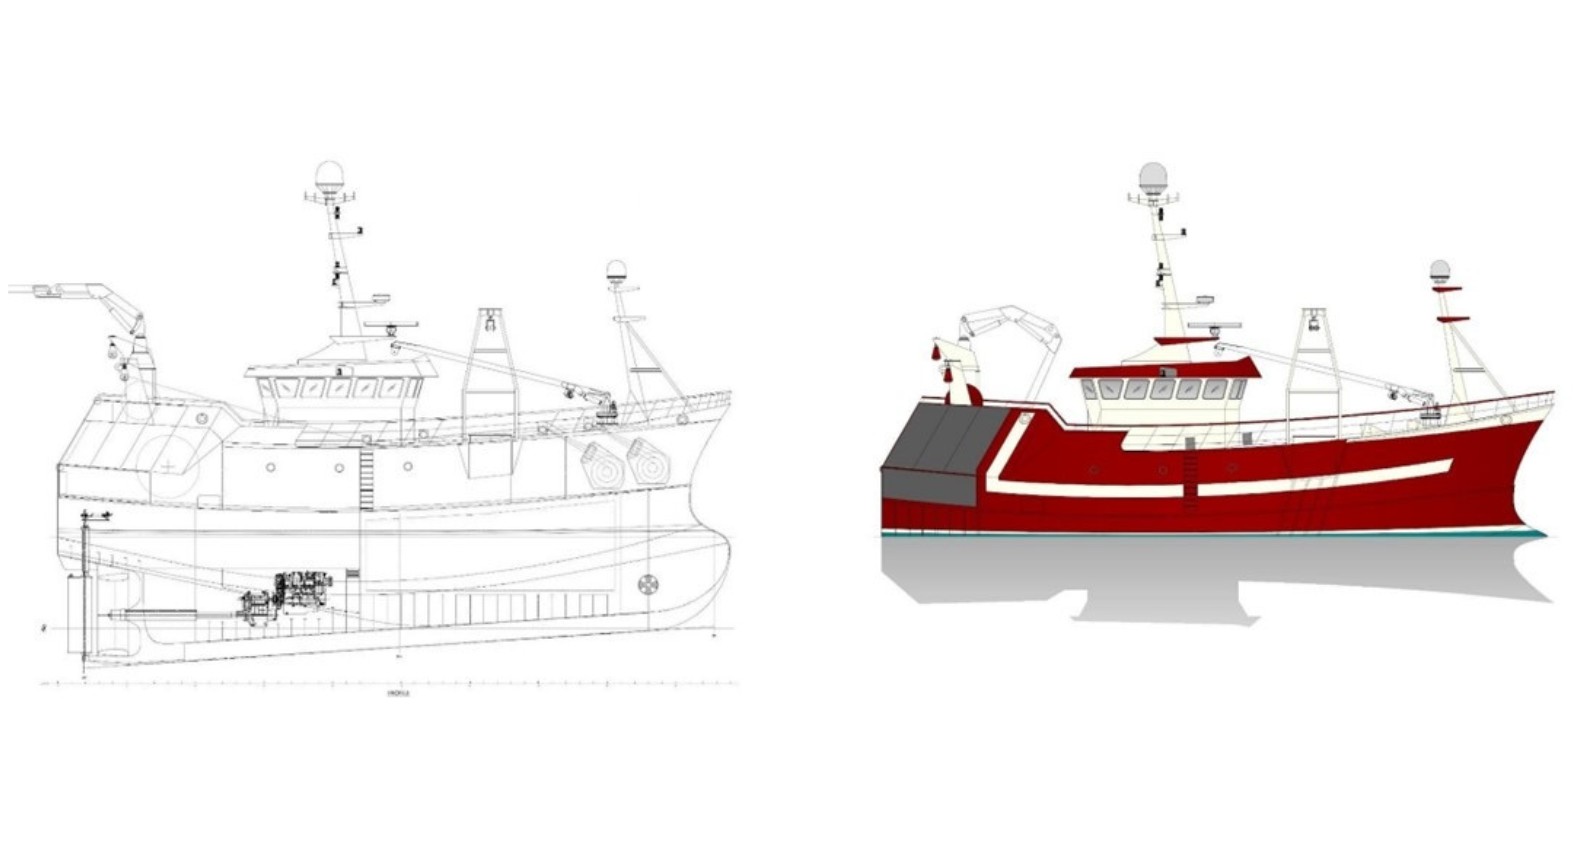 Pioneering new designs for net-zero fishing vessels - News